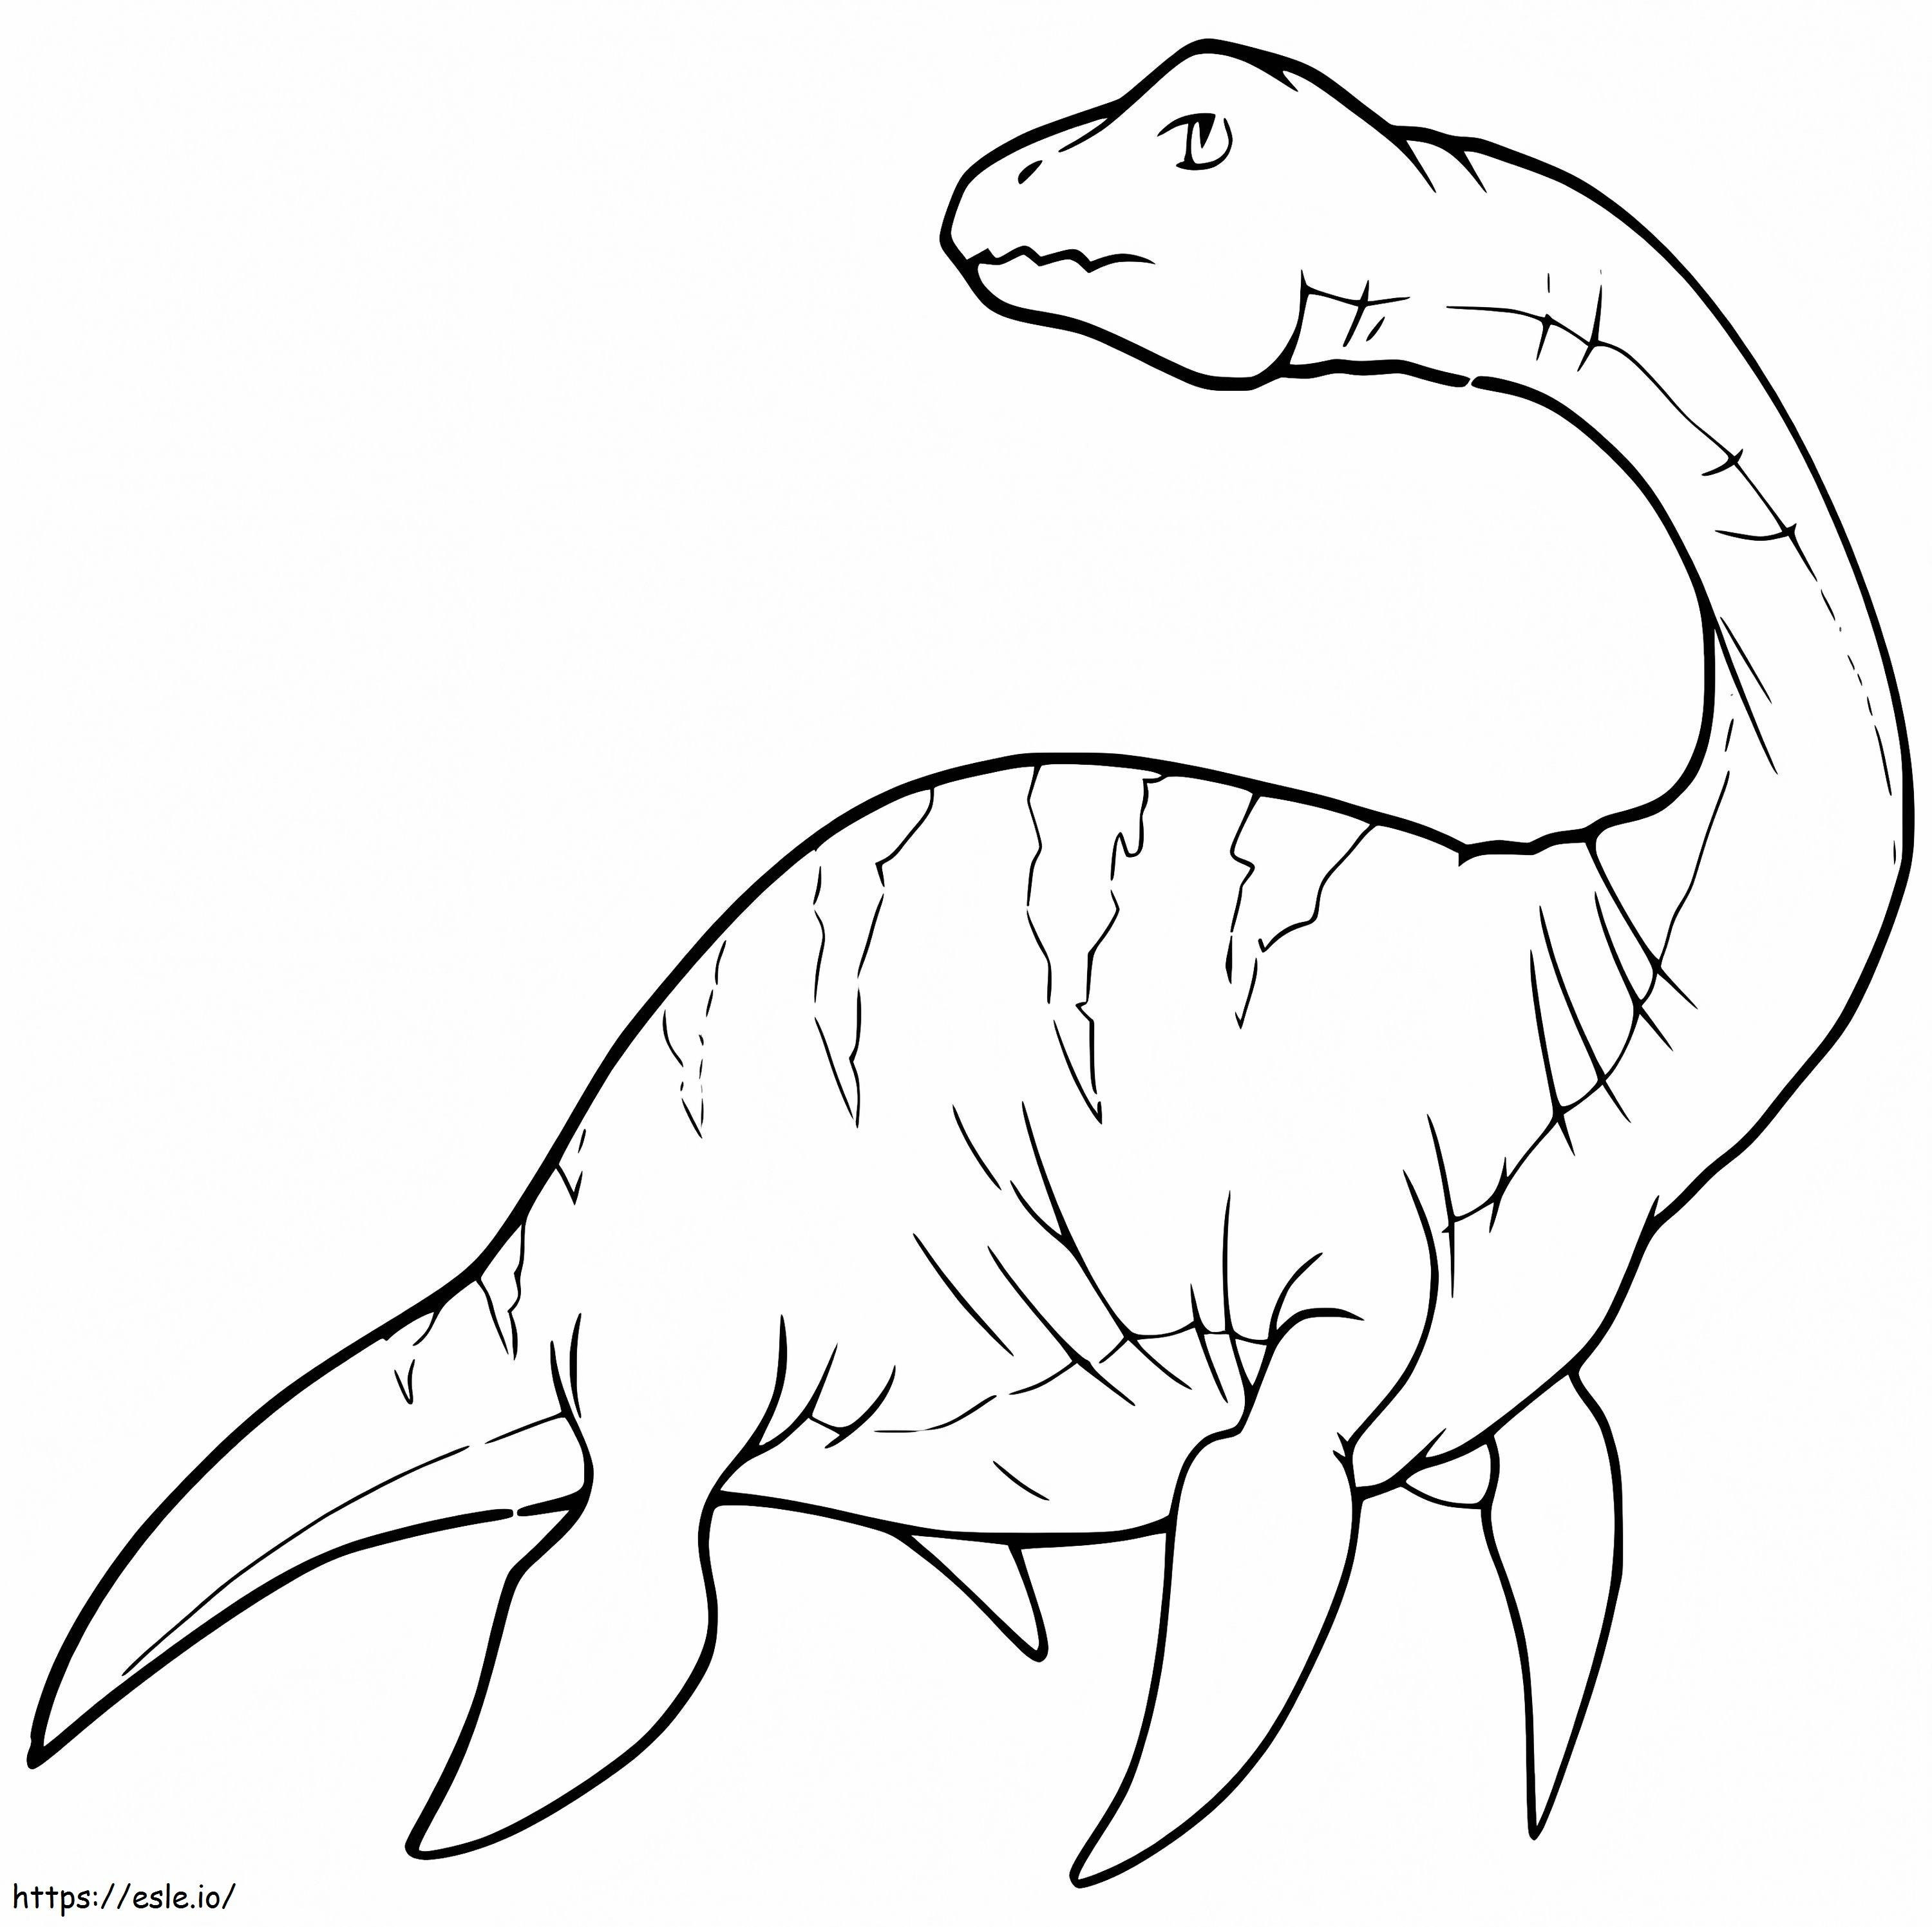 Plesiosaurio imprimible para colorear